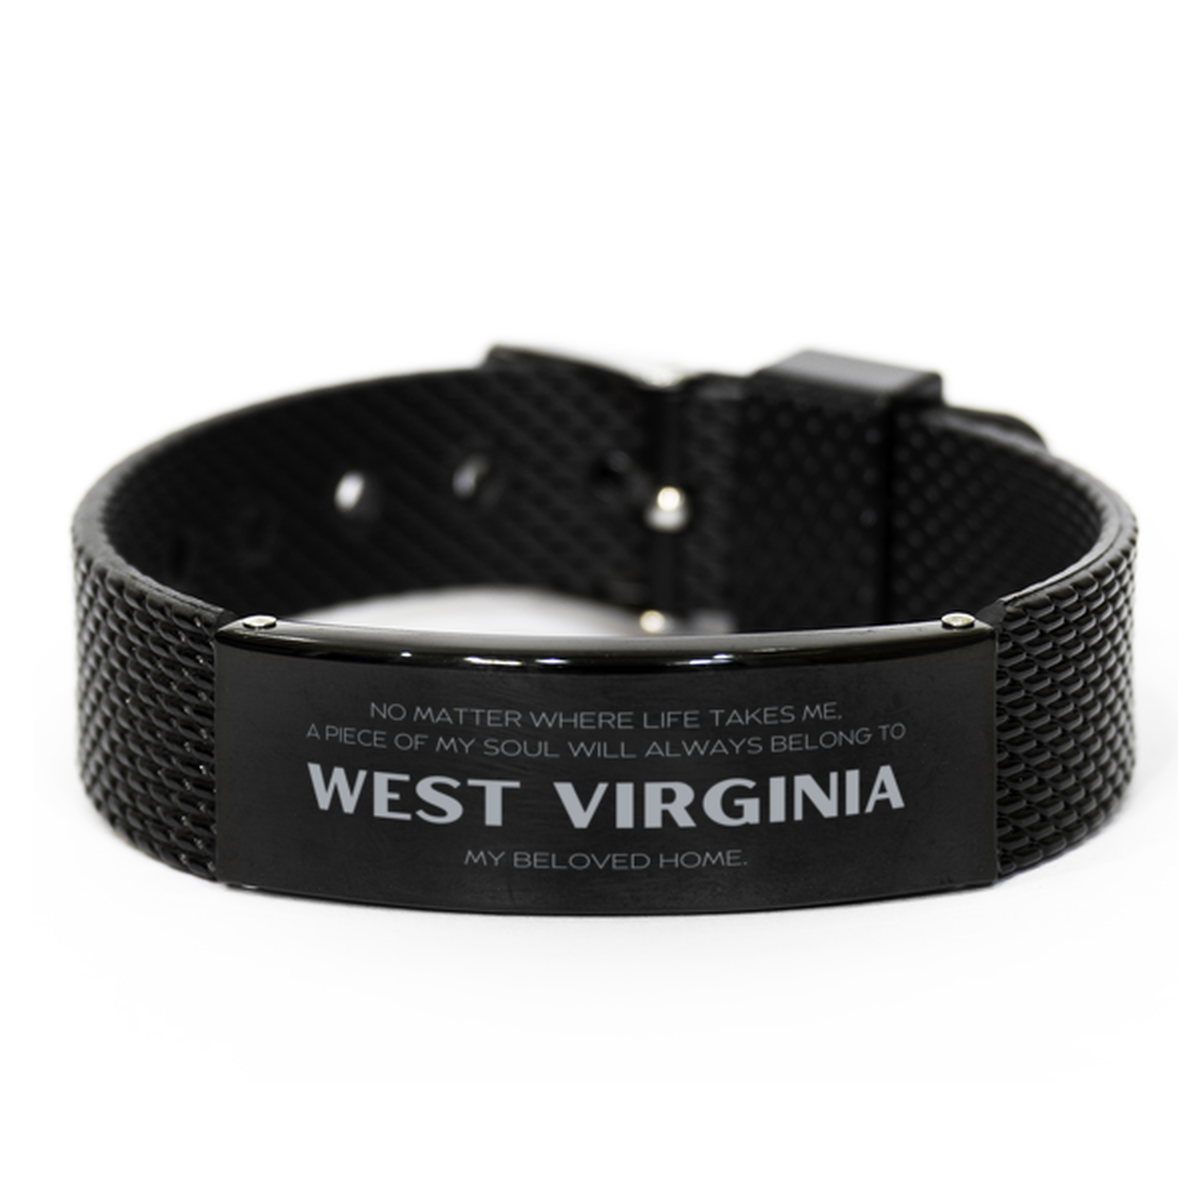 Love West Virginia State Gifts, My soul will always belong to West Virginia, Proud Black Shark Mesh Bracelet, Birthday Unique Gifts For West Virginia Men, Women, Friends